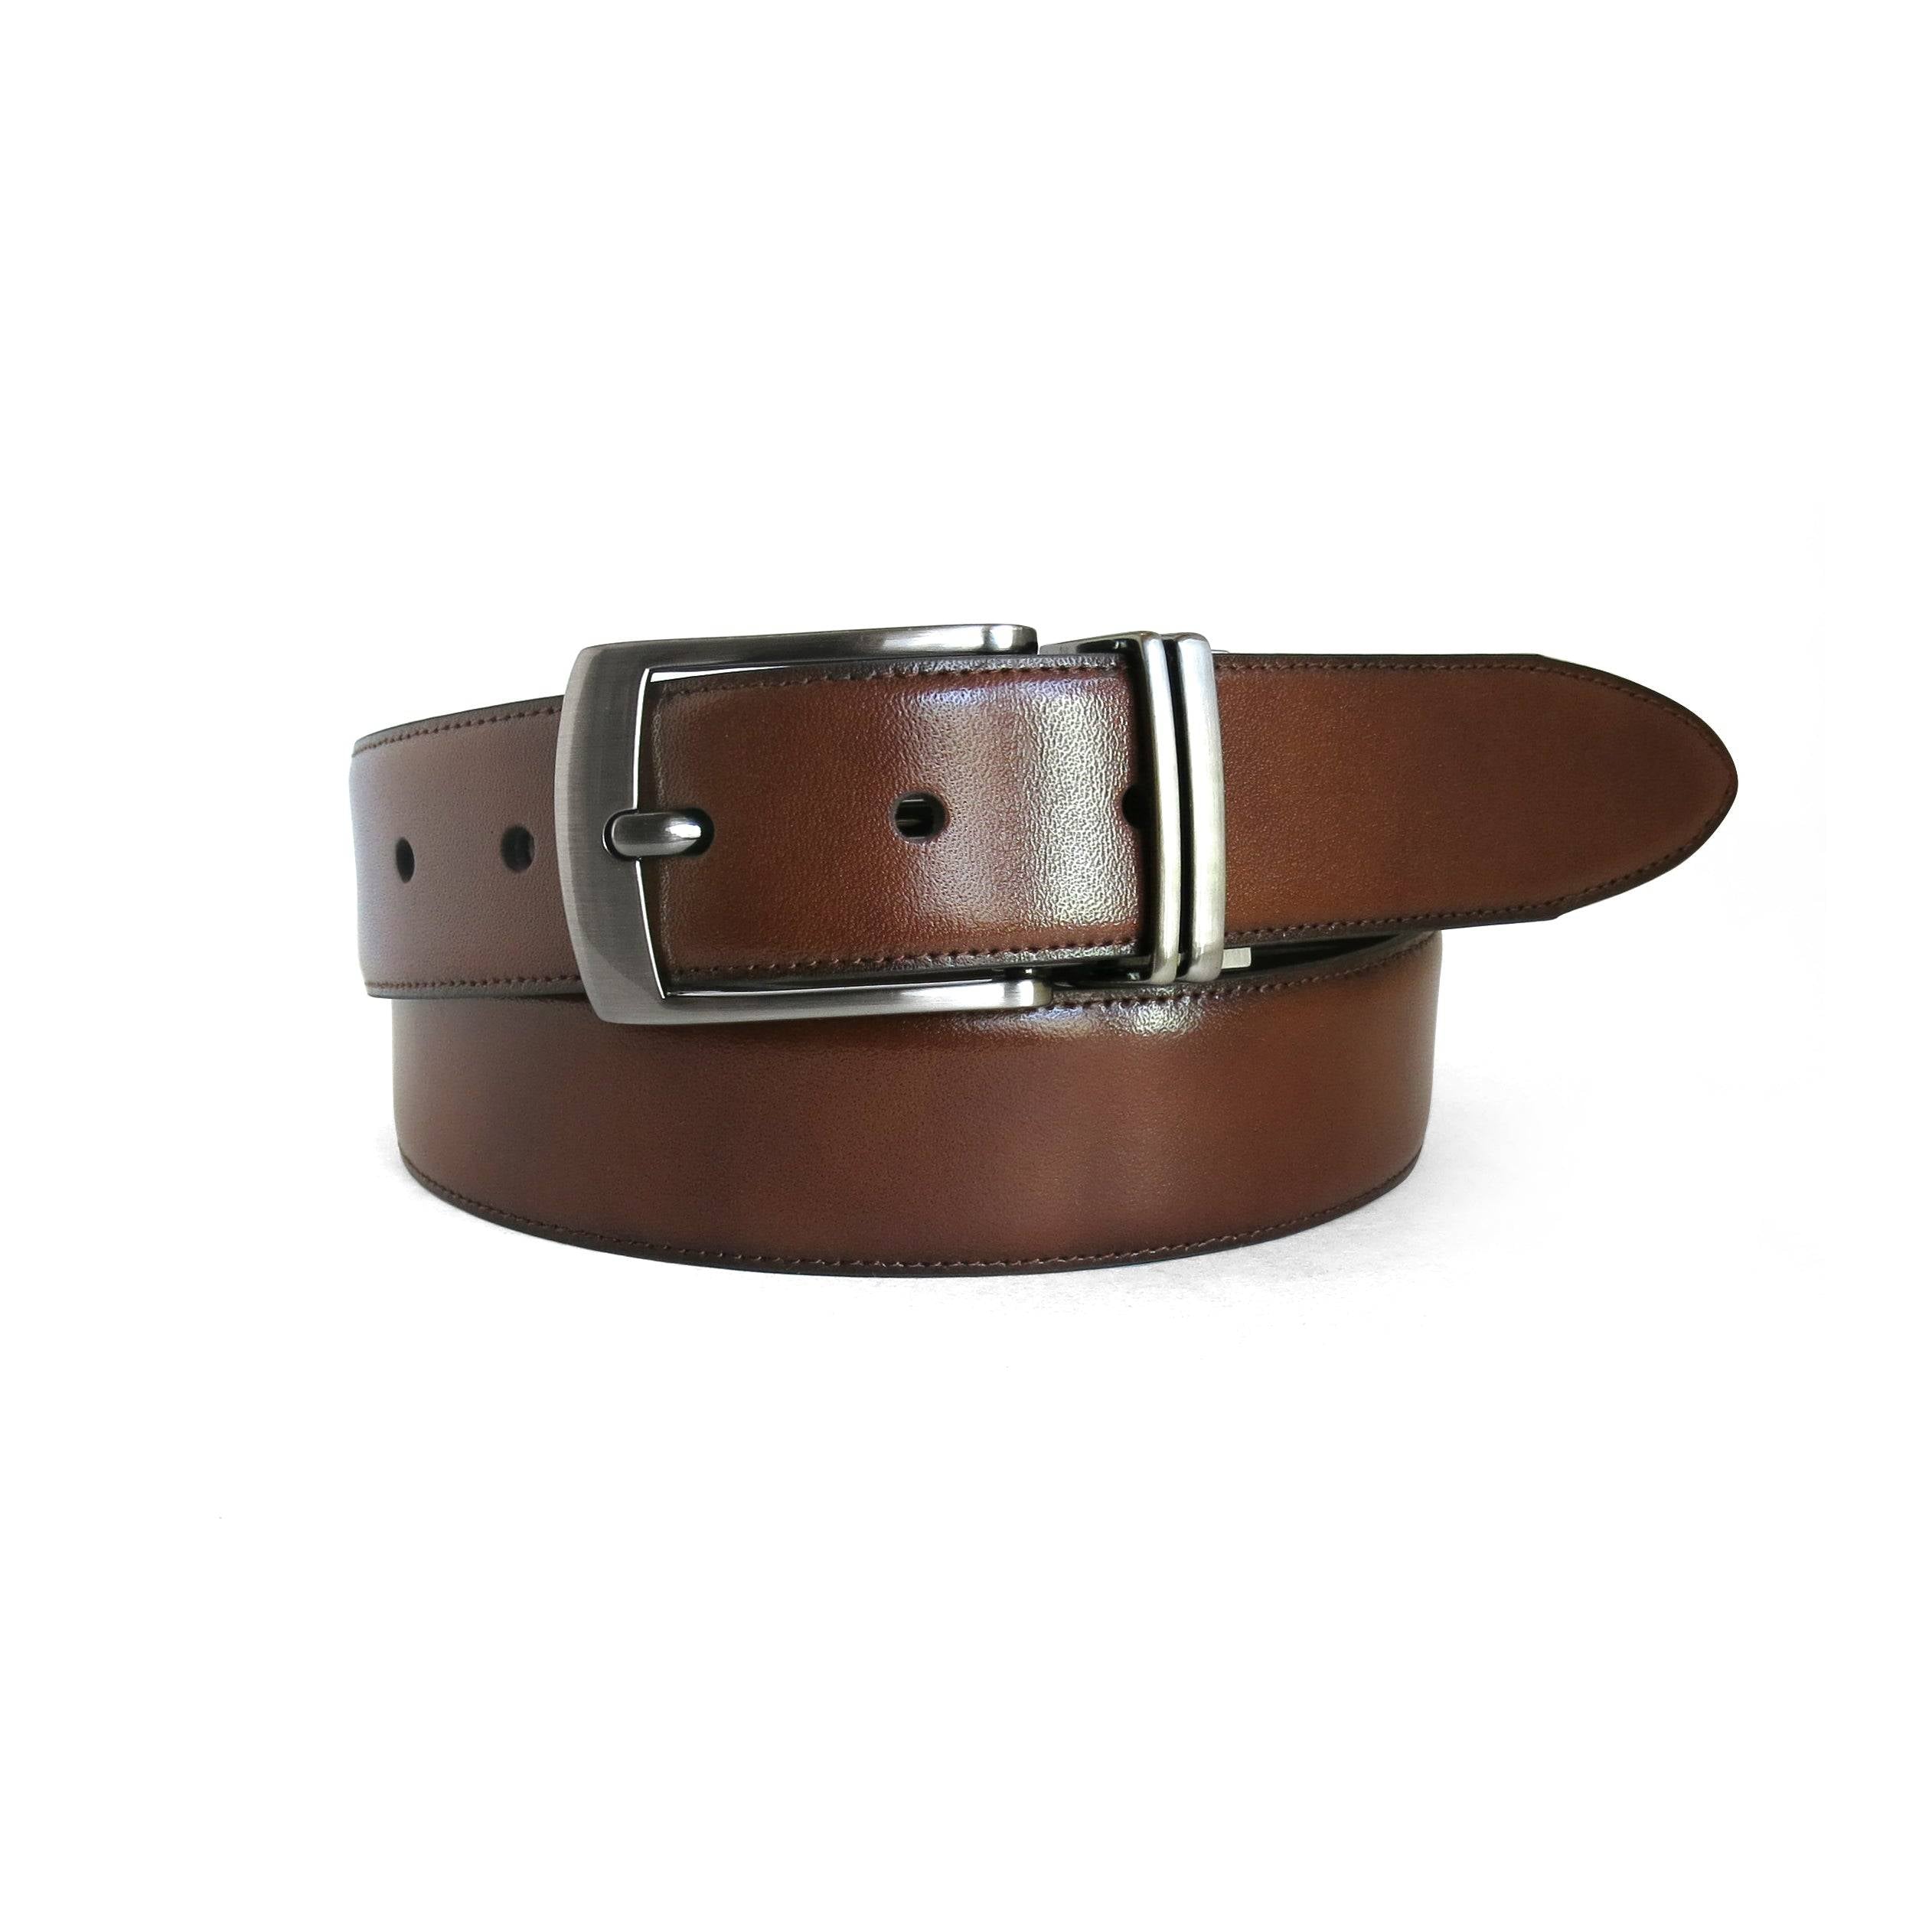 Shop Leather Belt For Men - Premium Leather Belts | BOCONI